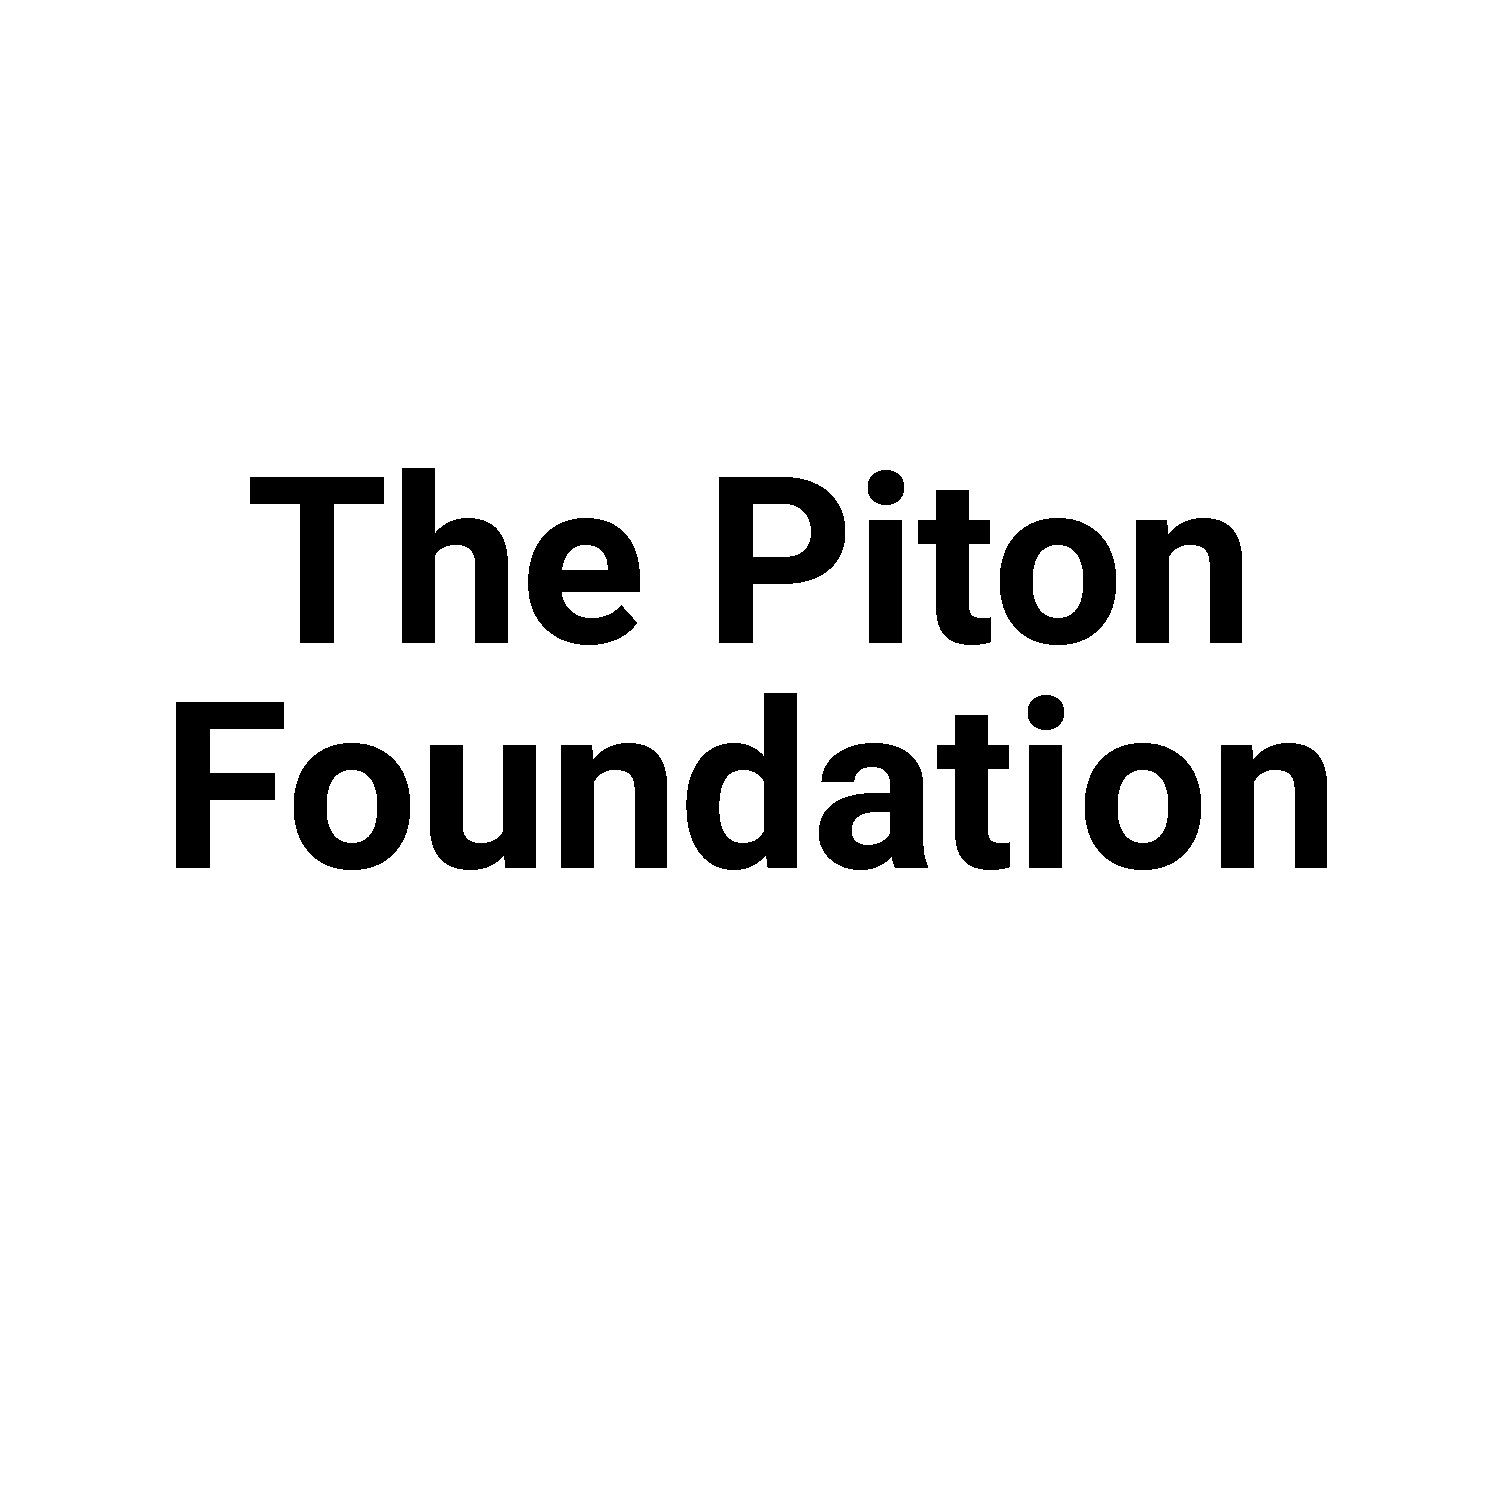 The Piton Foundation